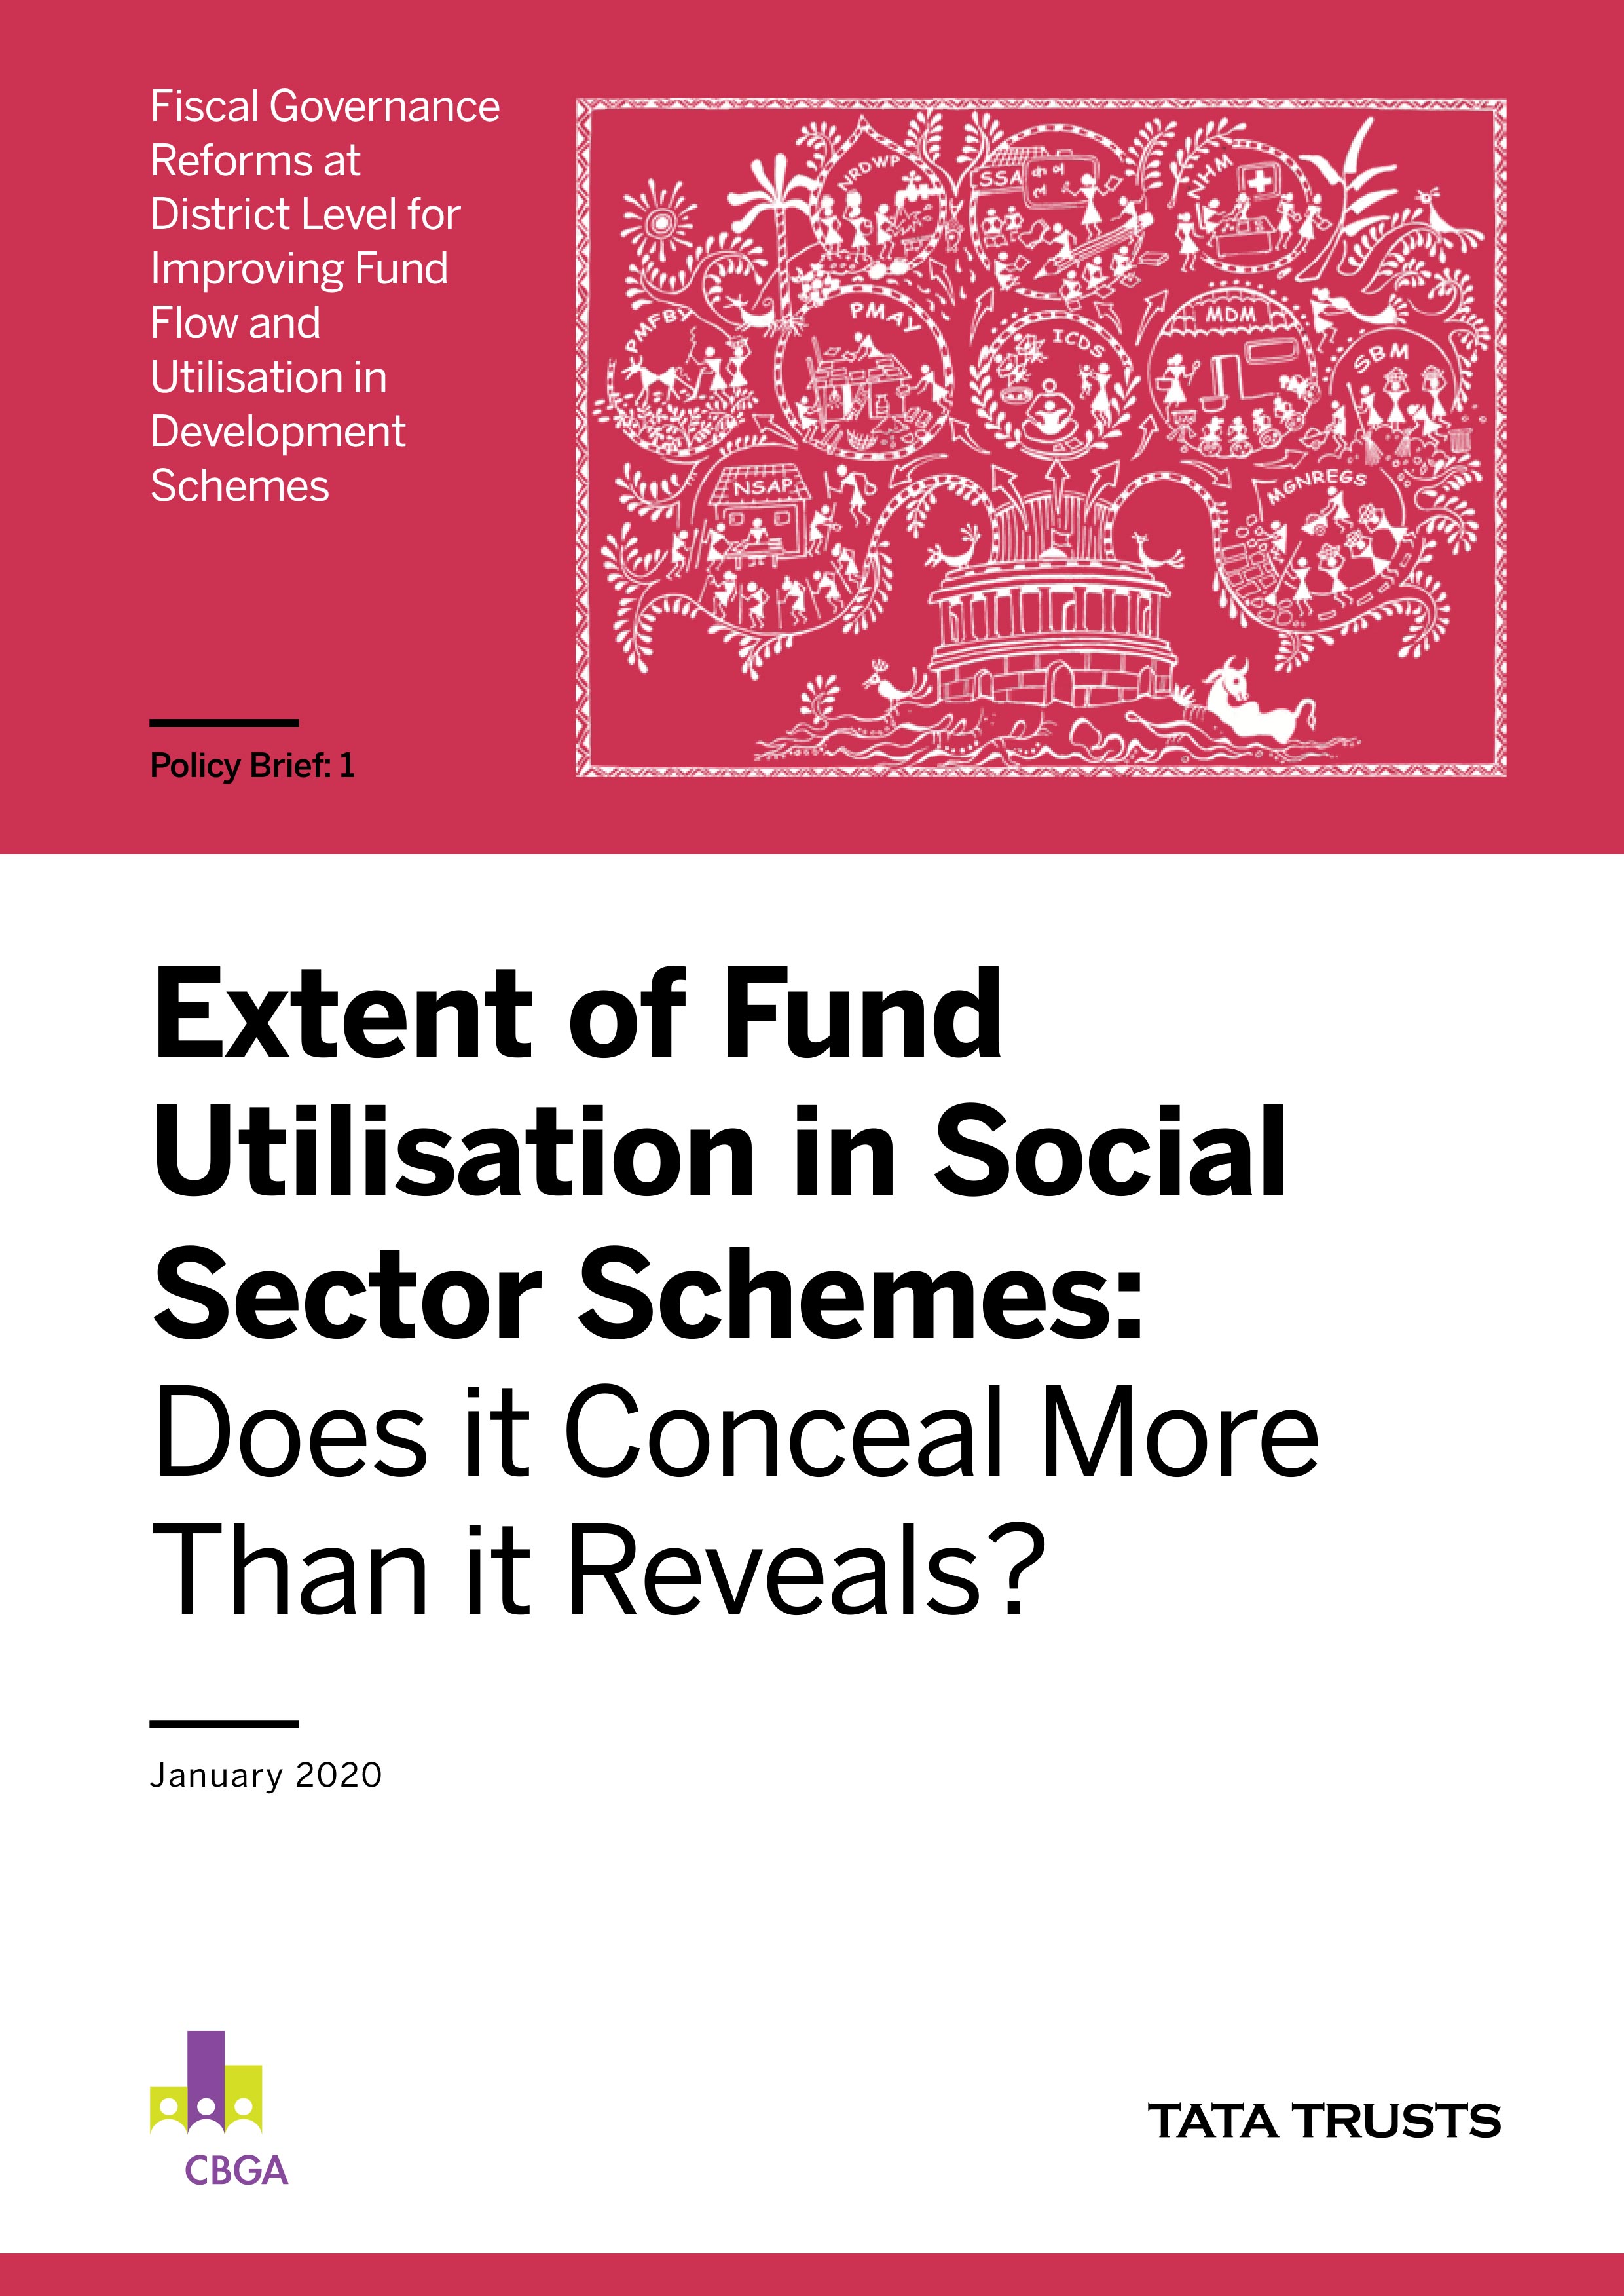 Fund Utilisation in Social Sector Schemes-Policy Brief